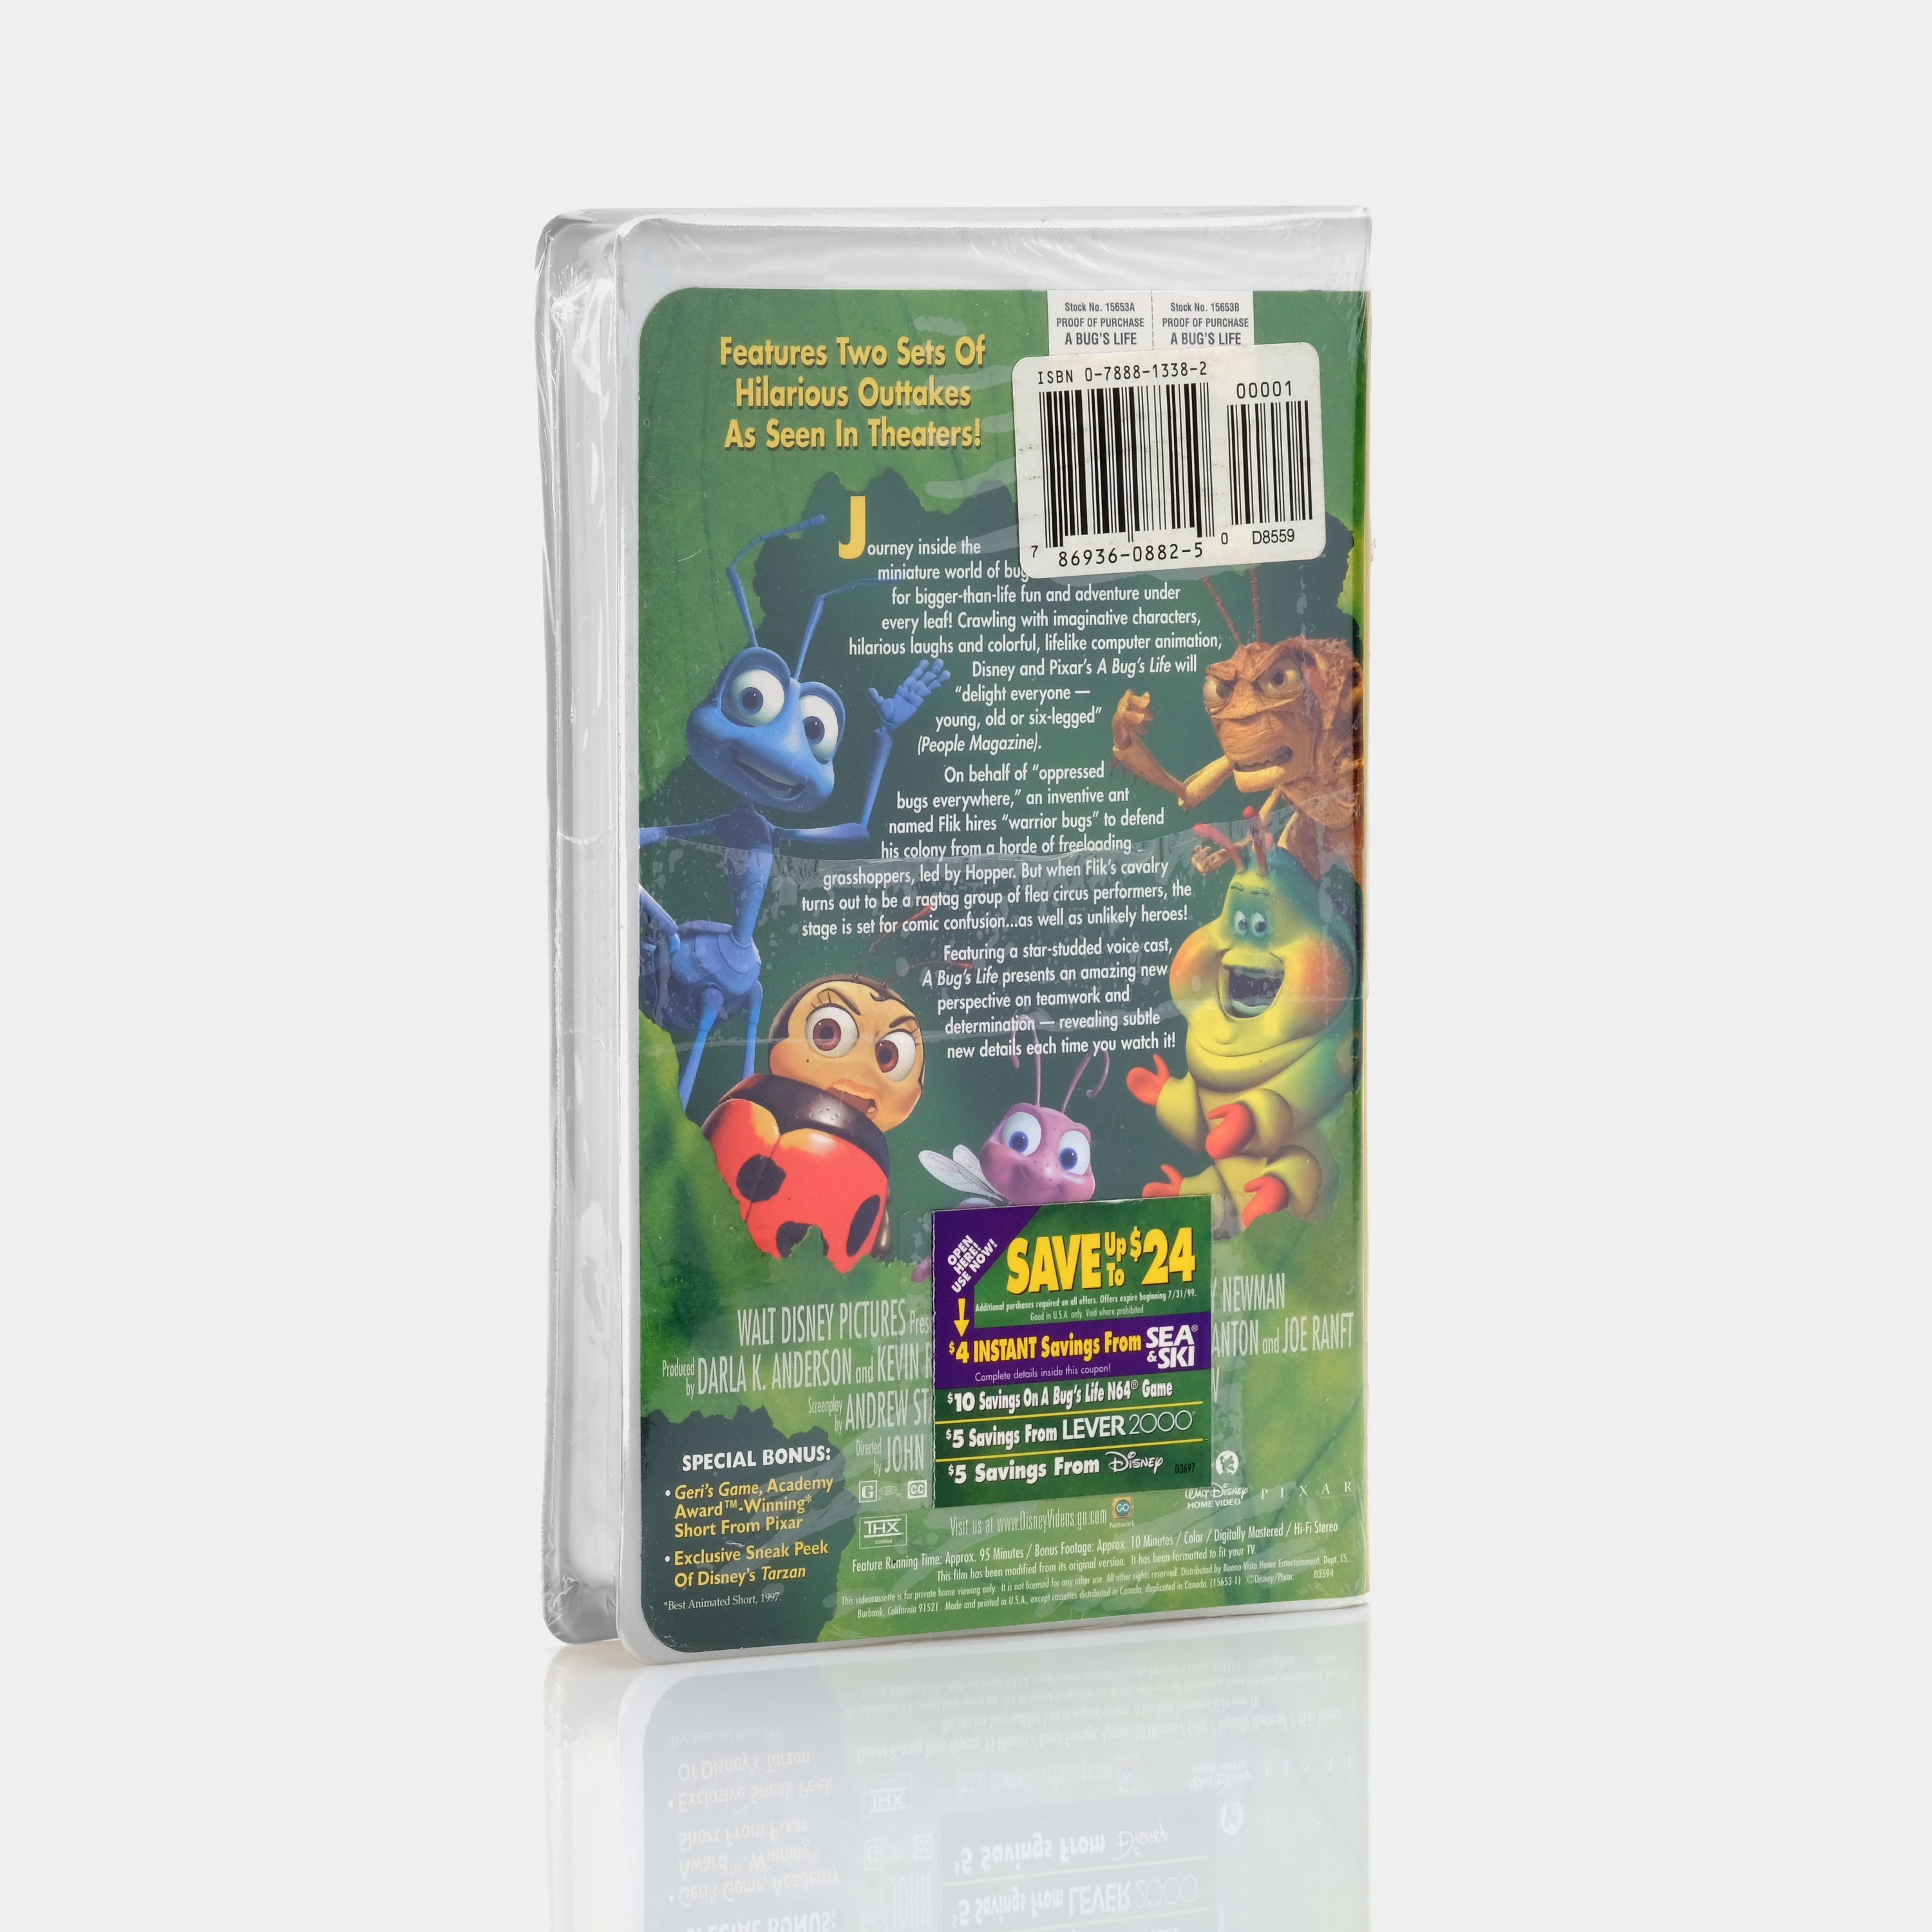 Disney's A Bug's Life (Sealed) VHS Tape